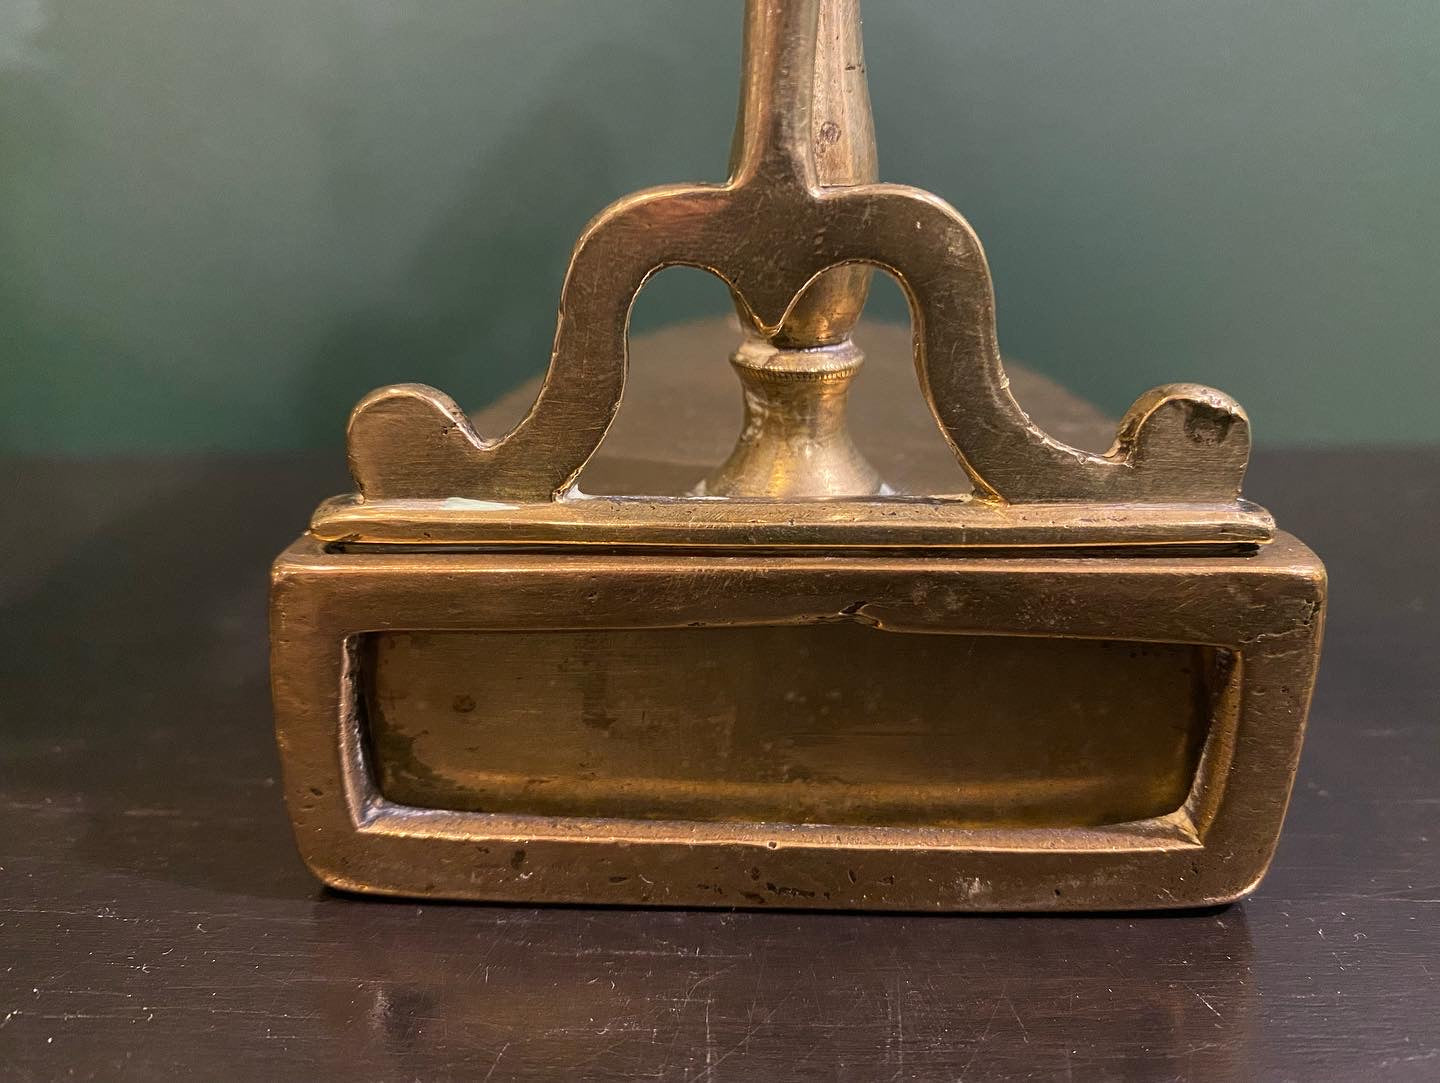 Antique brass flat iron, France 1860